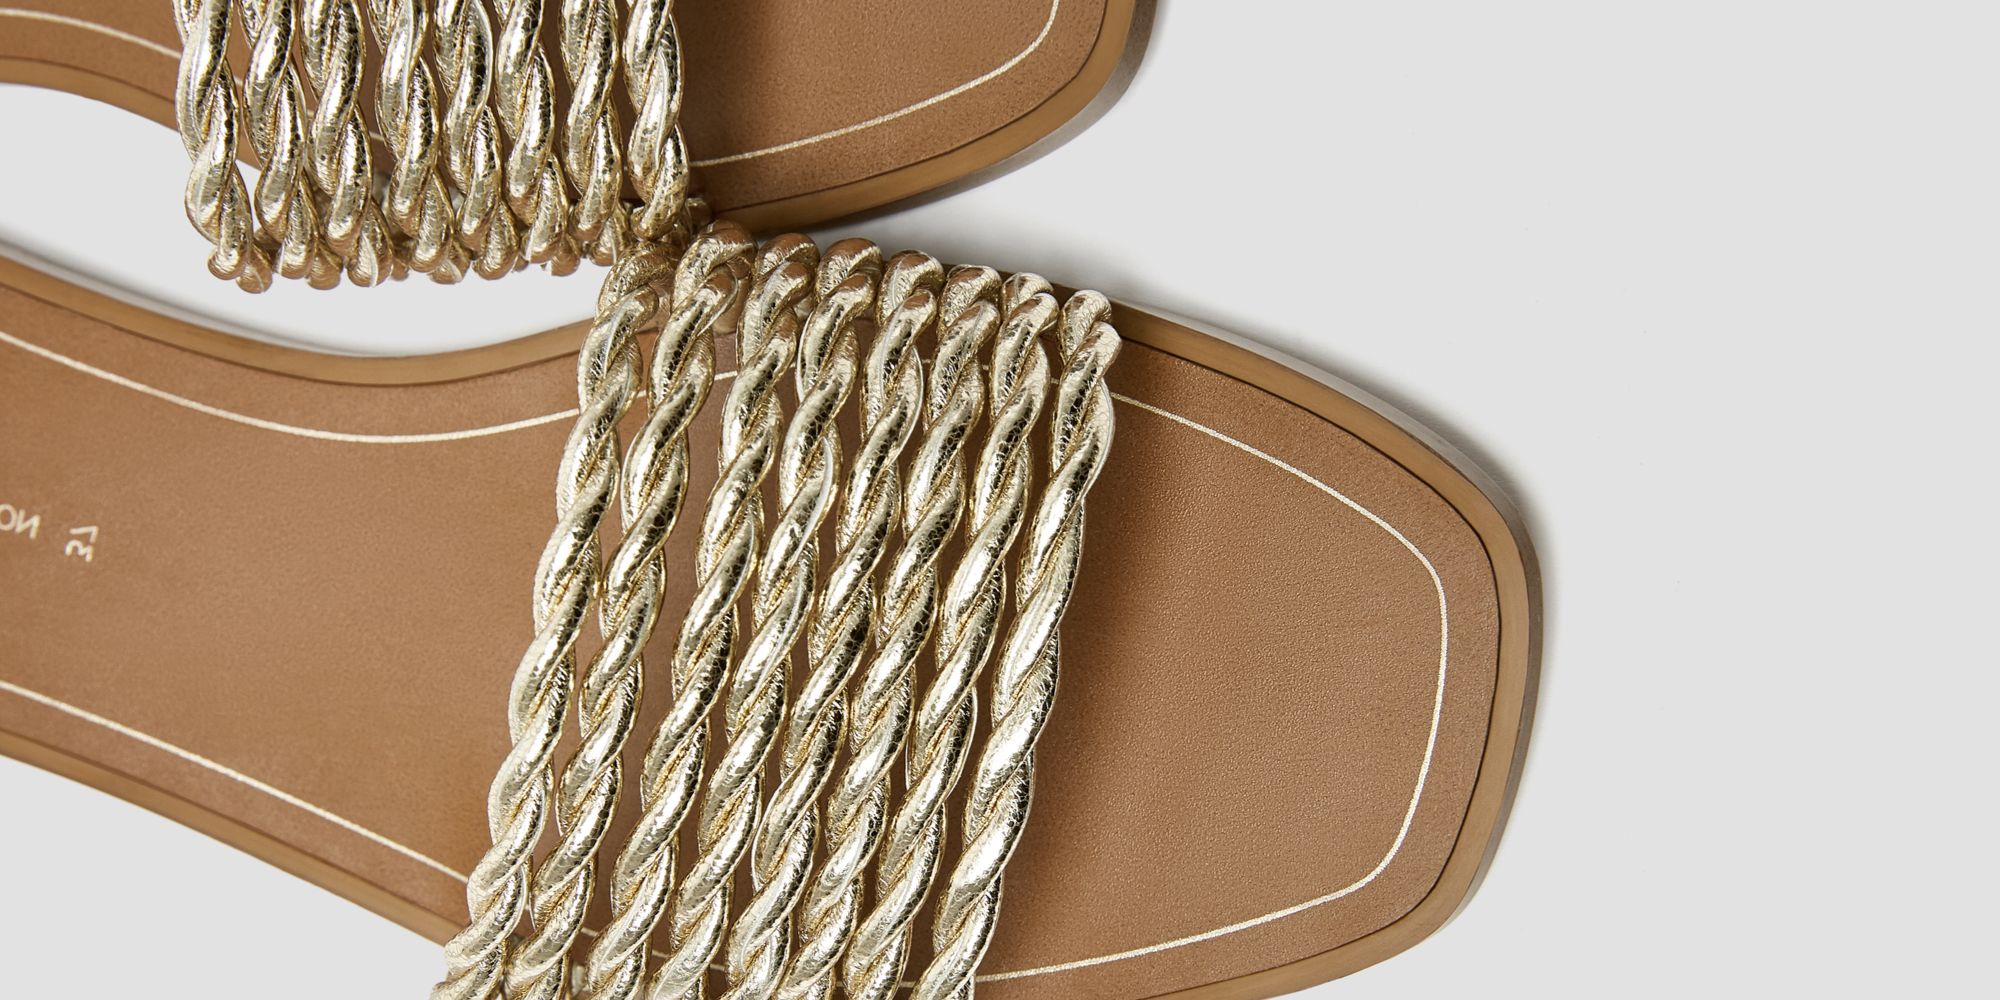 Estas sandalias planas trenzadas doradas Pull&Bear